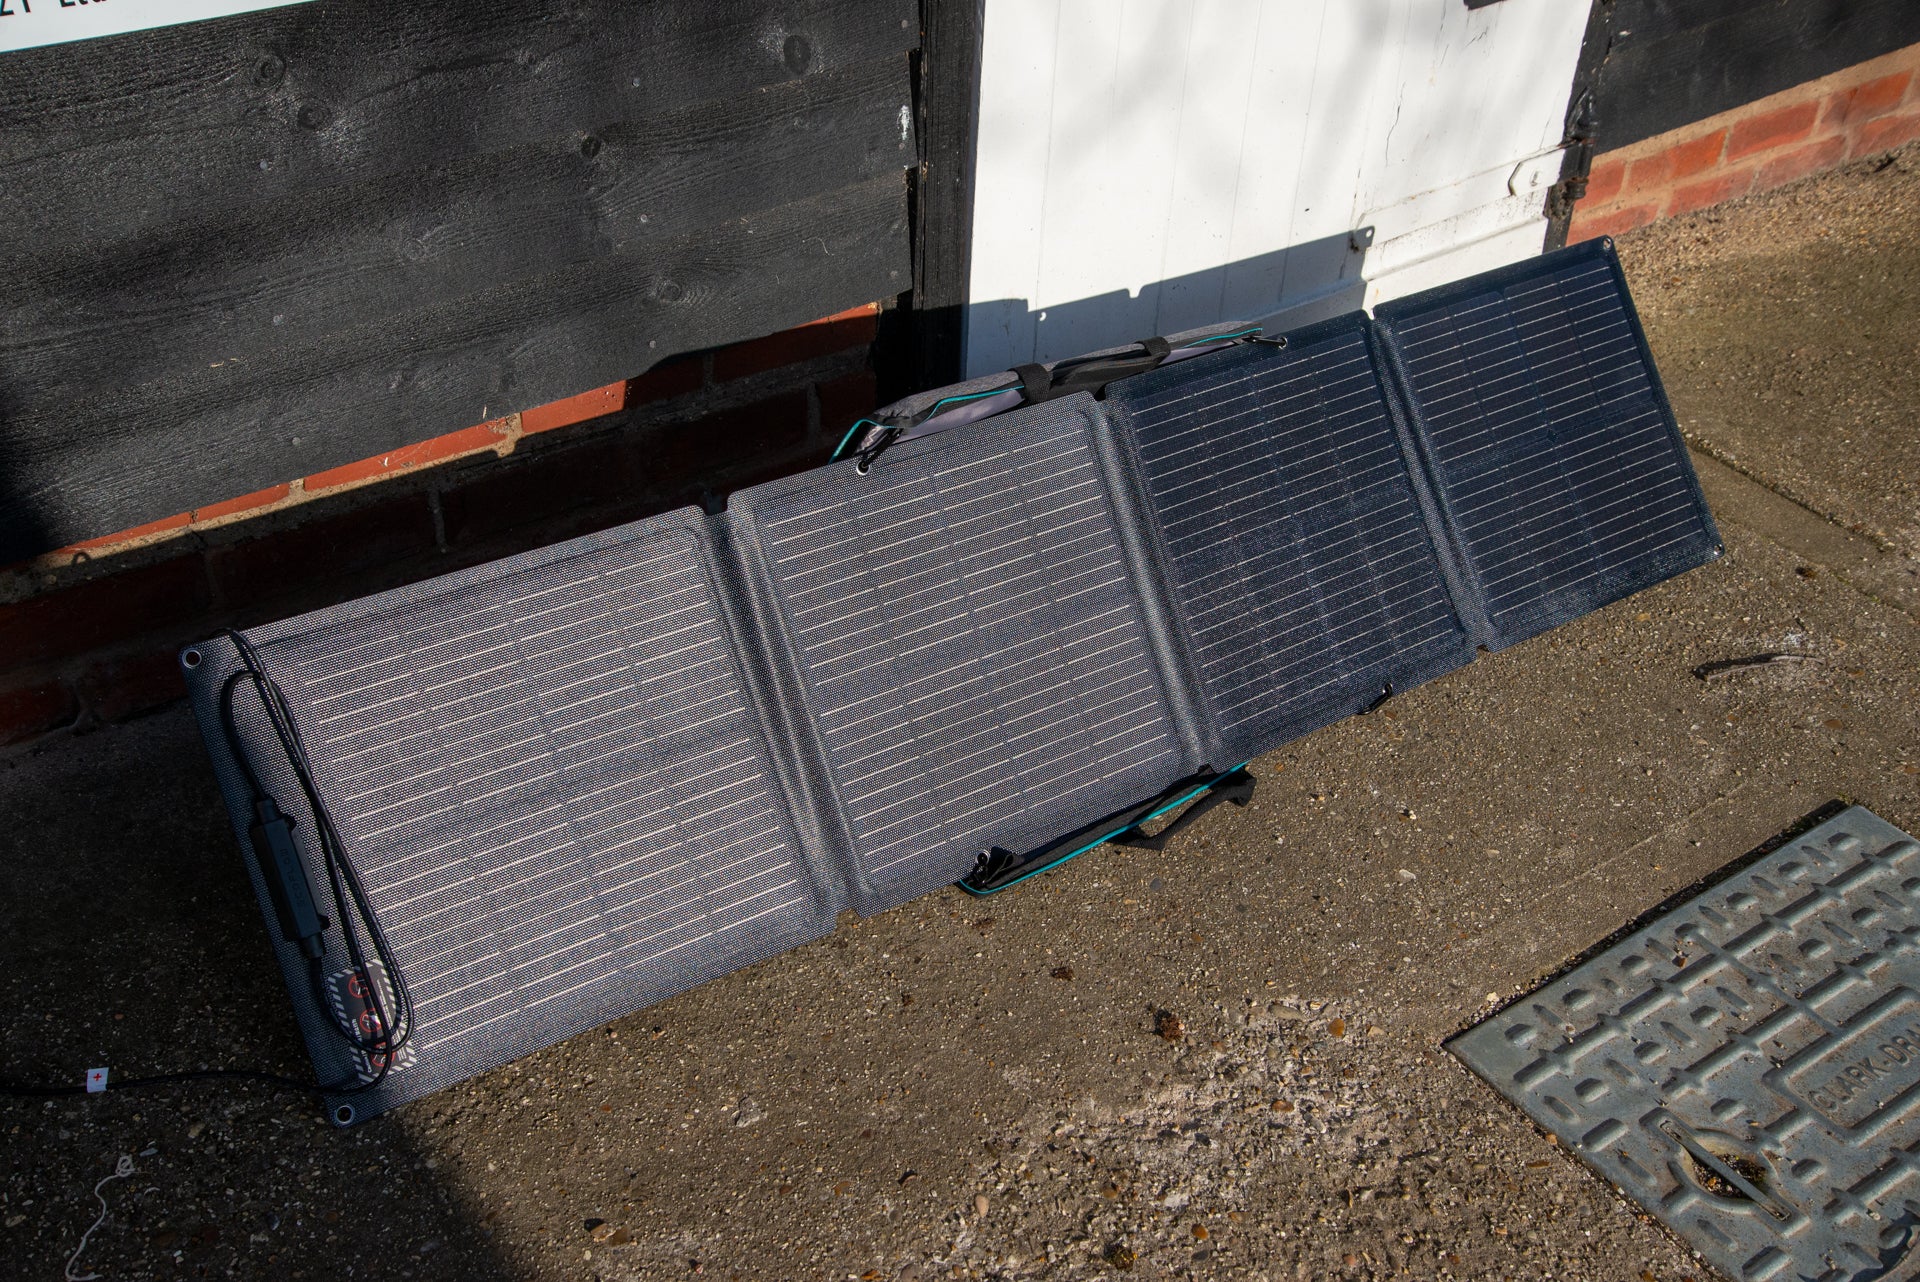 Ecoflow River 2 solar panels unpacked